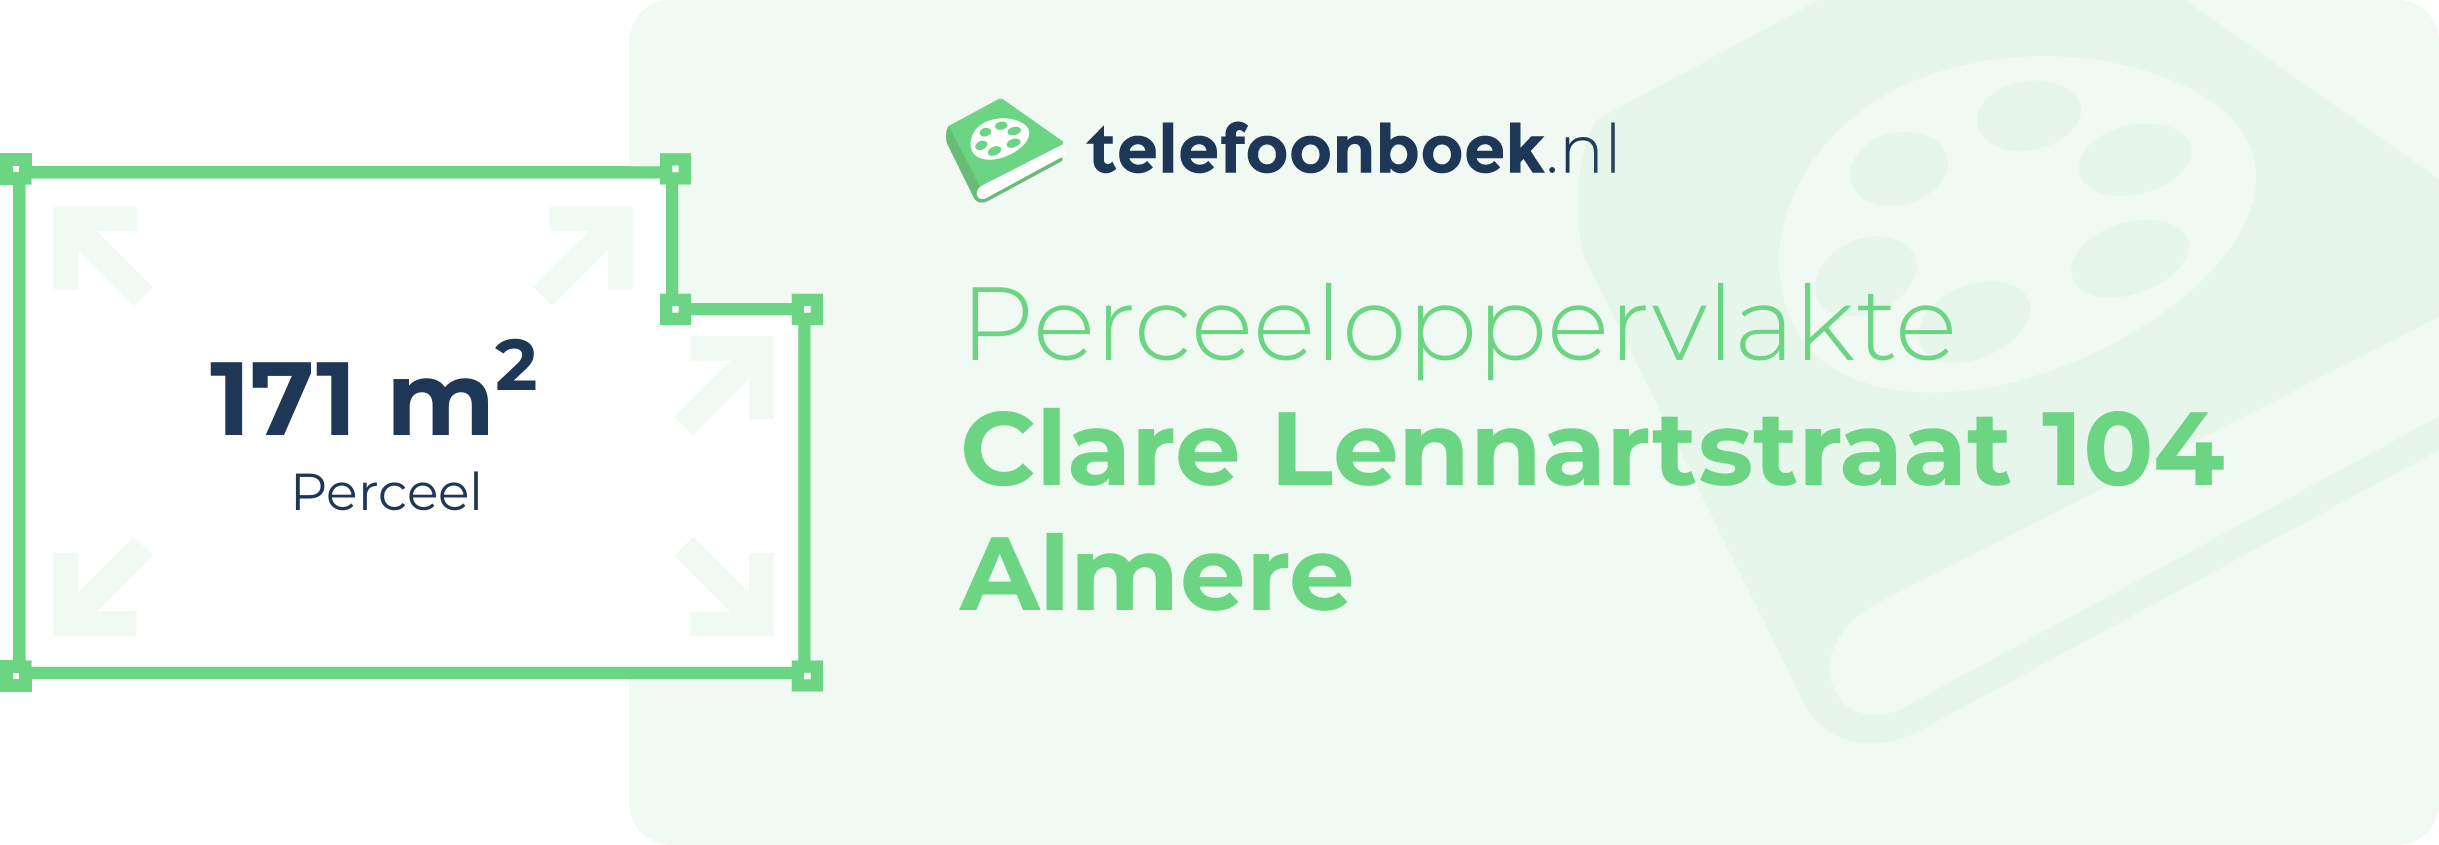 Perceeloppervlakte Clare Lennartstraat 104 Almere